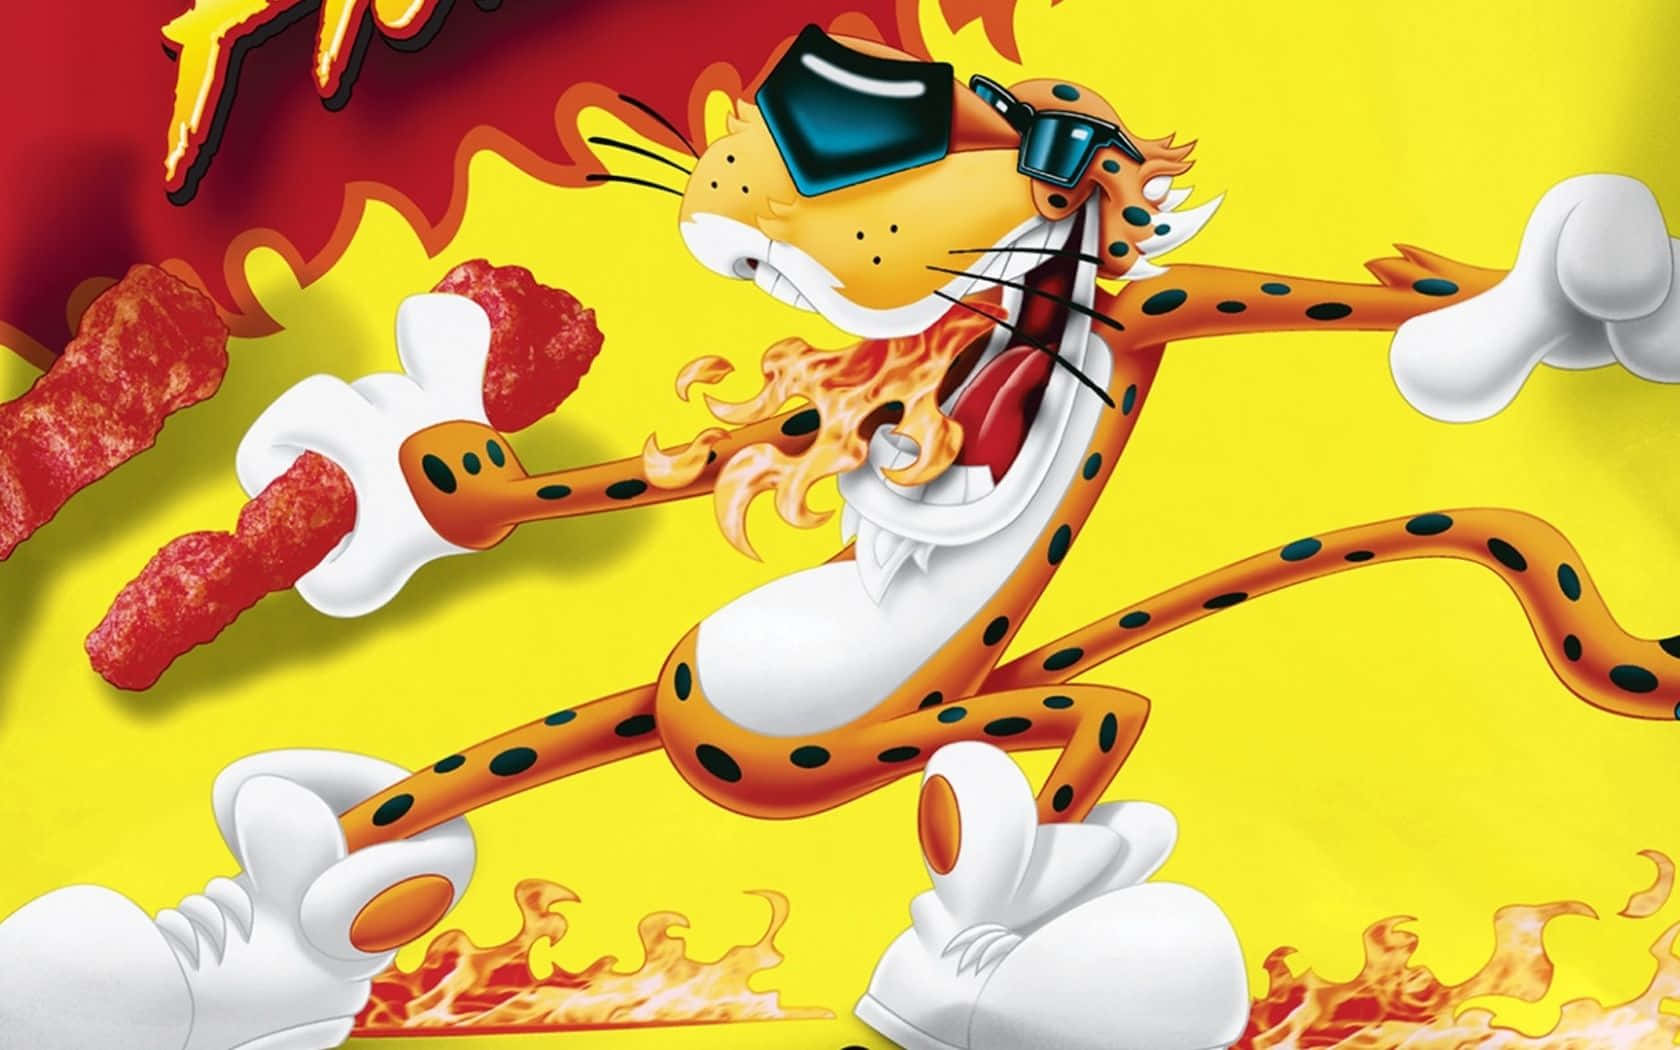 Feel the fiery crunch of Hot Cheetos! Wallpaper